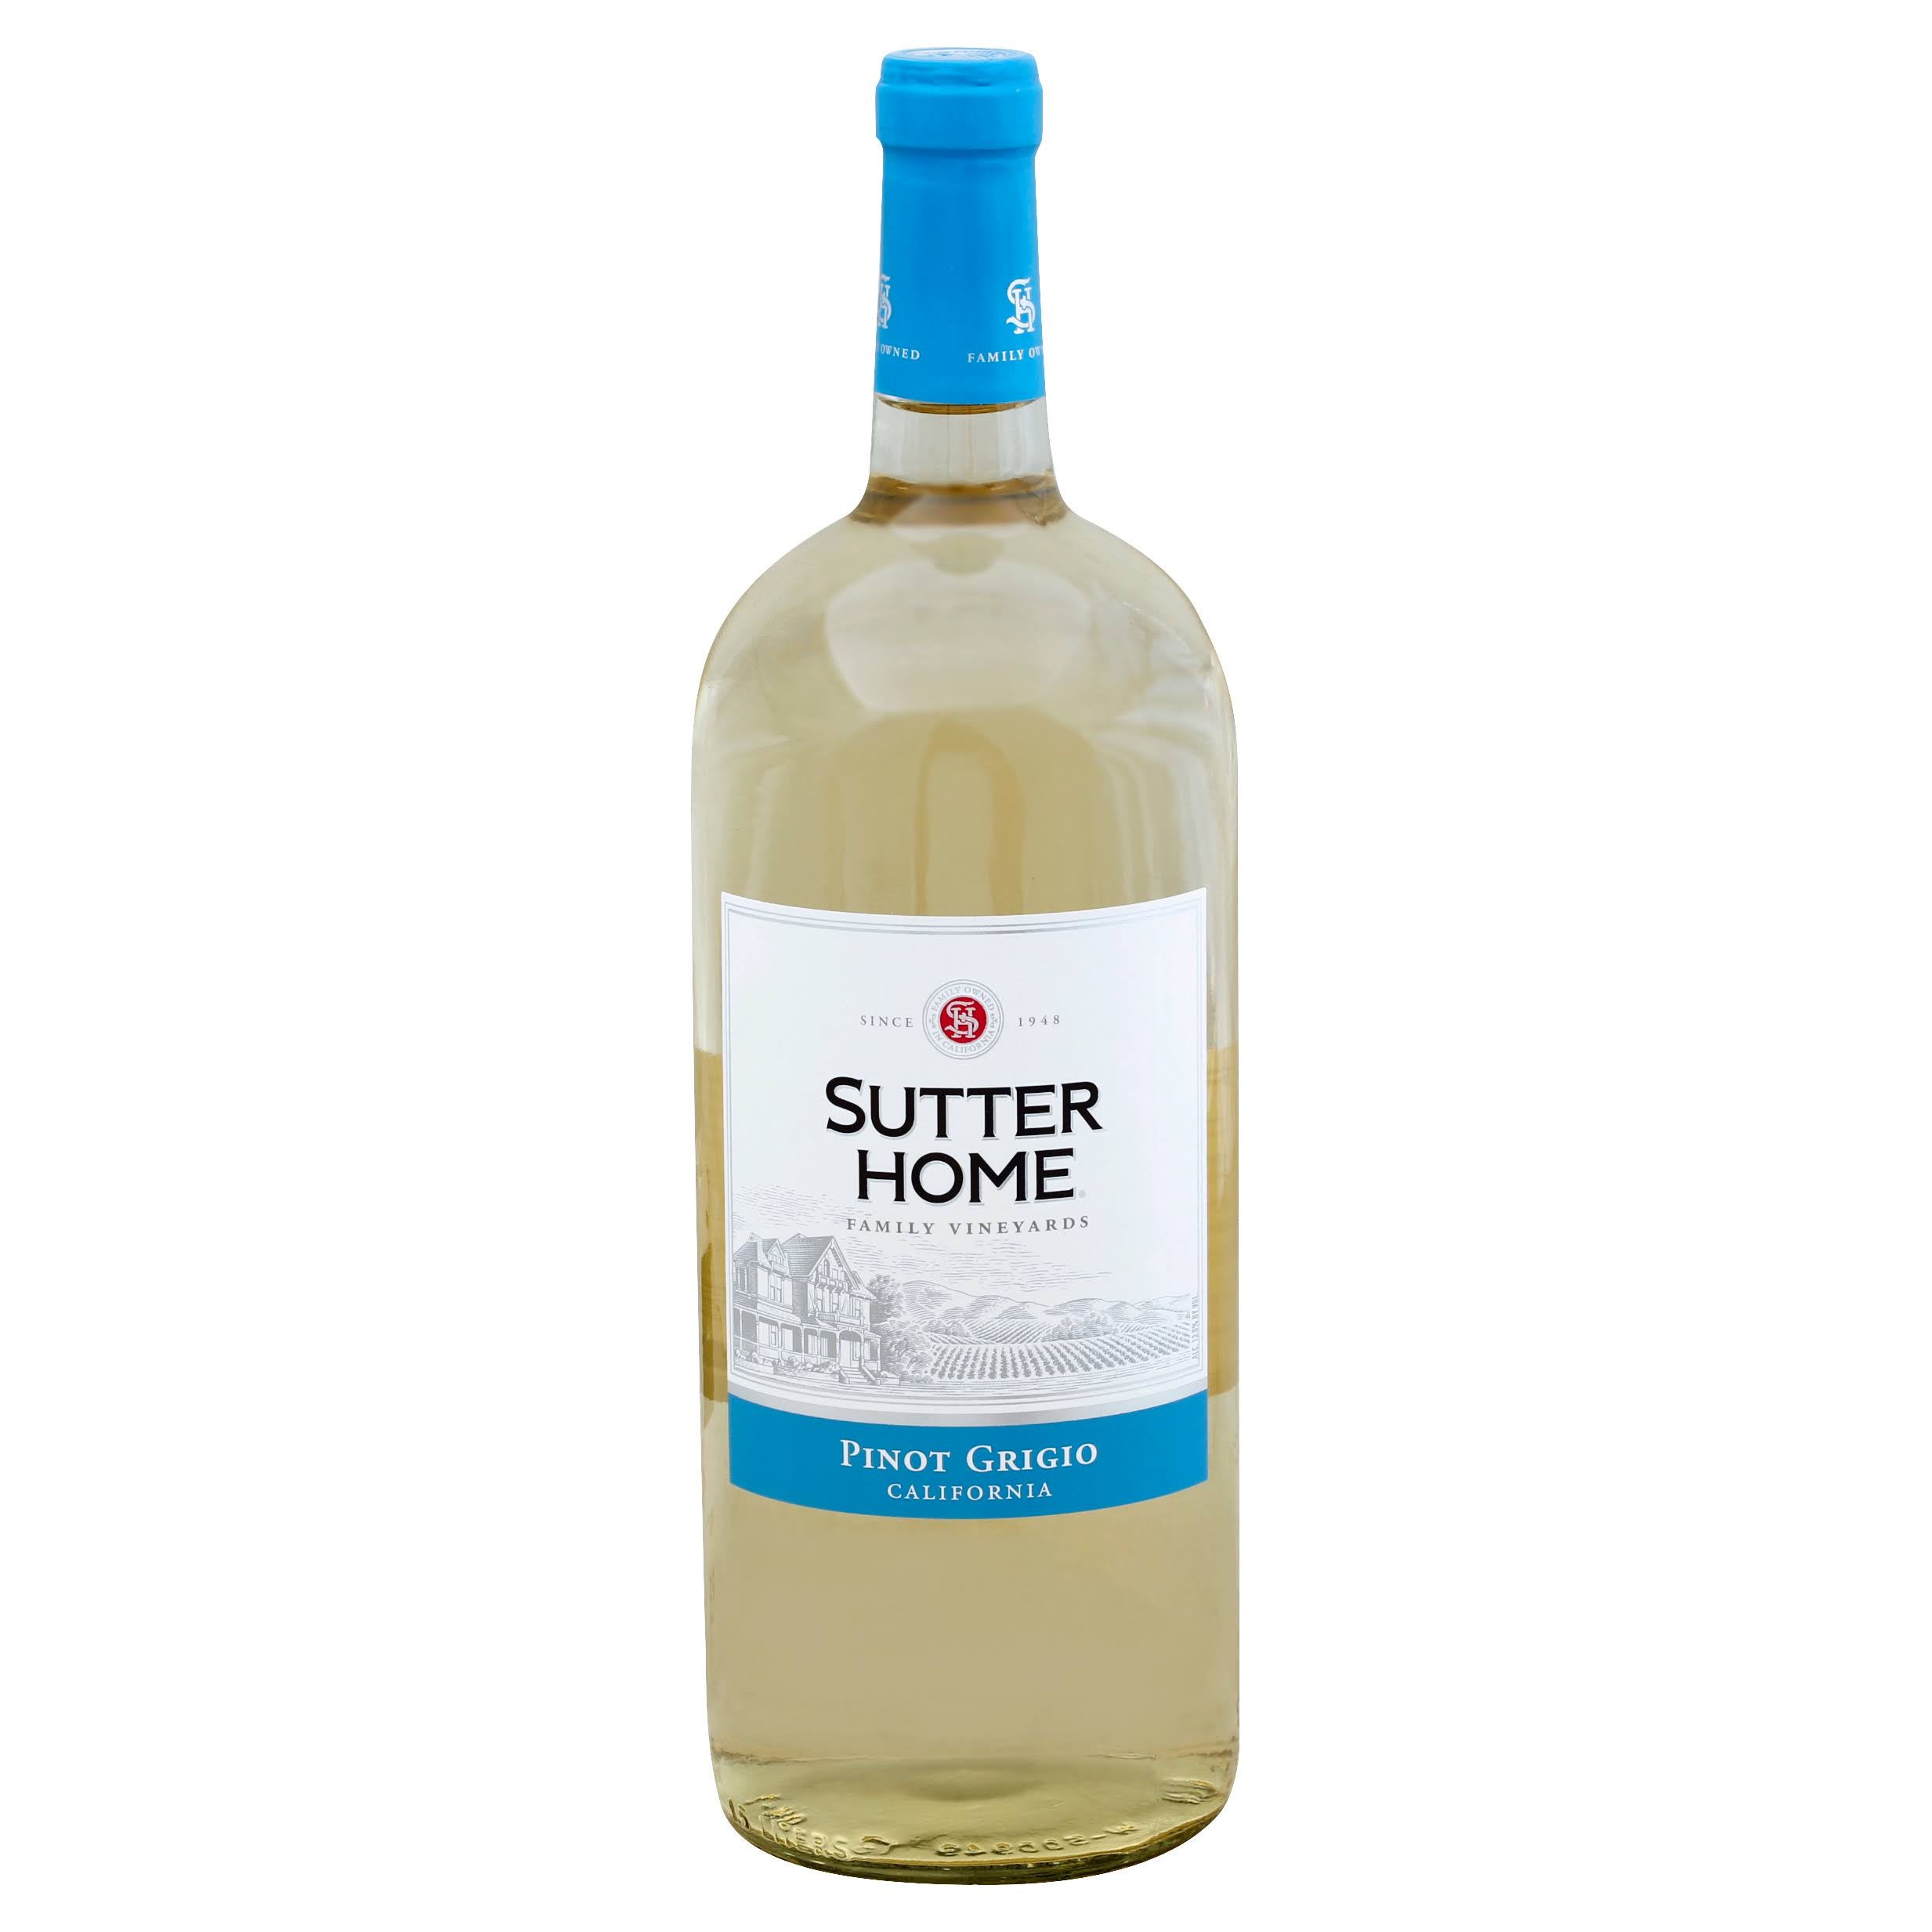 Sutter Home Family Vineyards Pinot Grigio - California